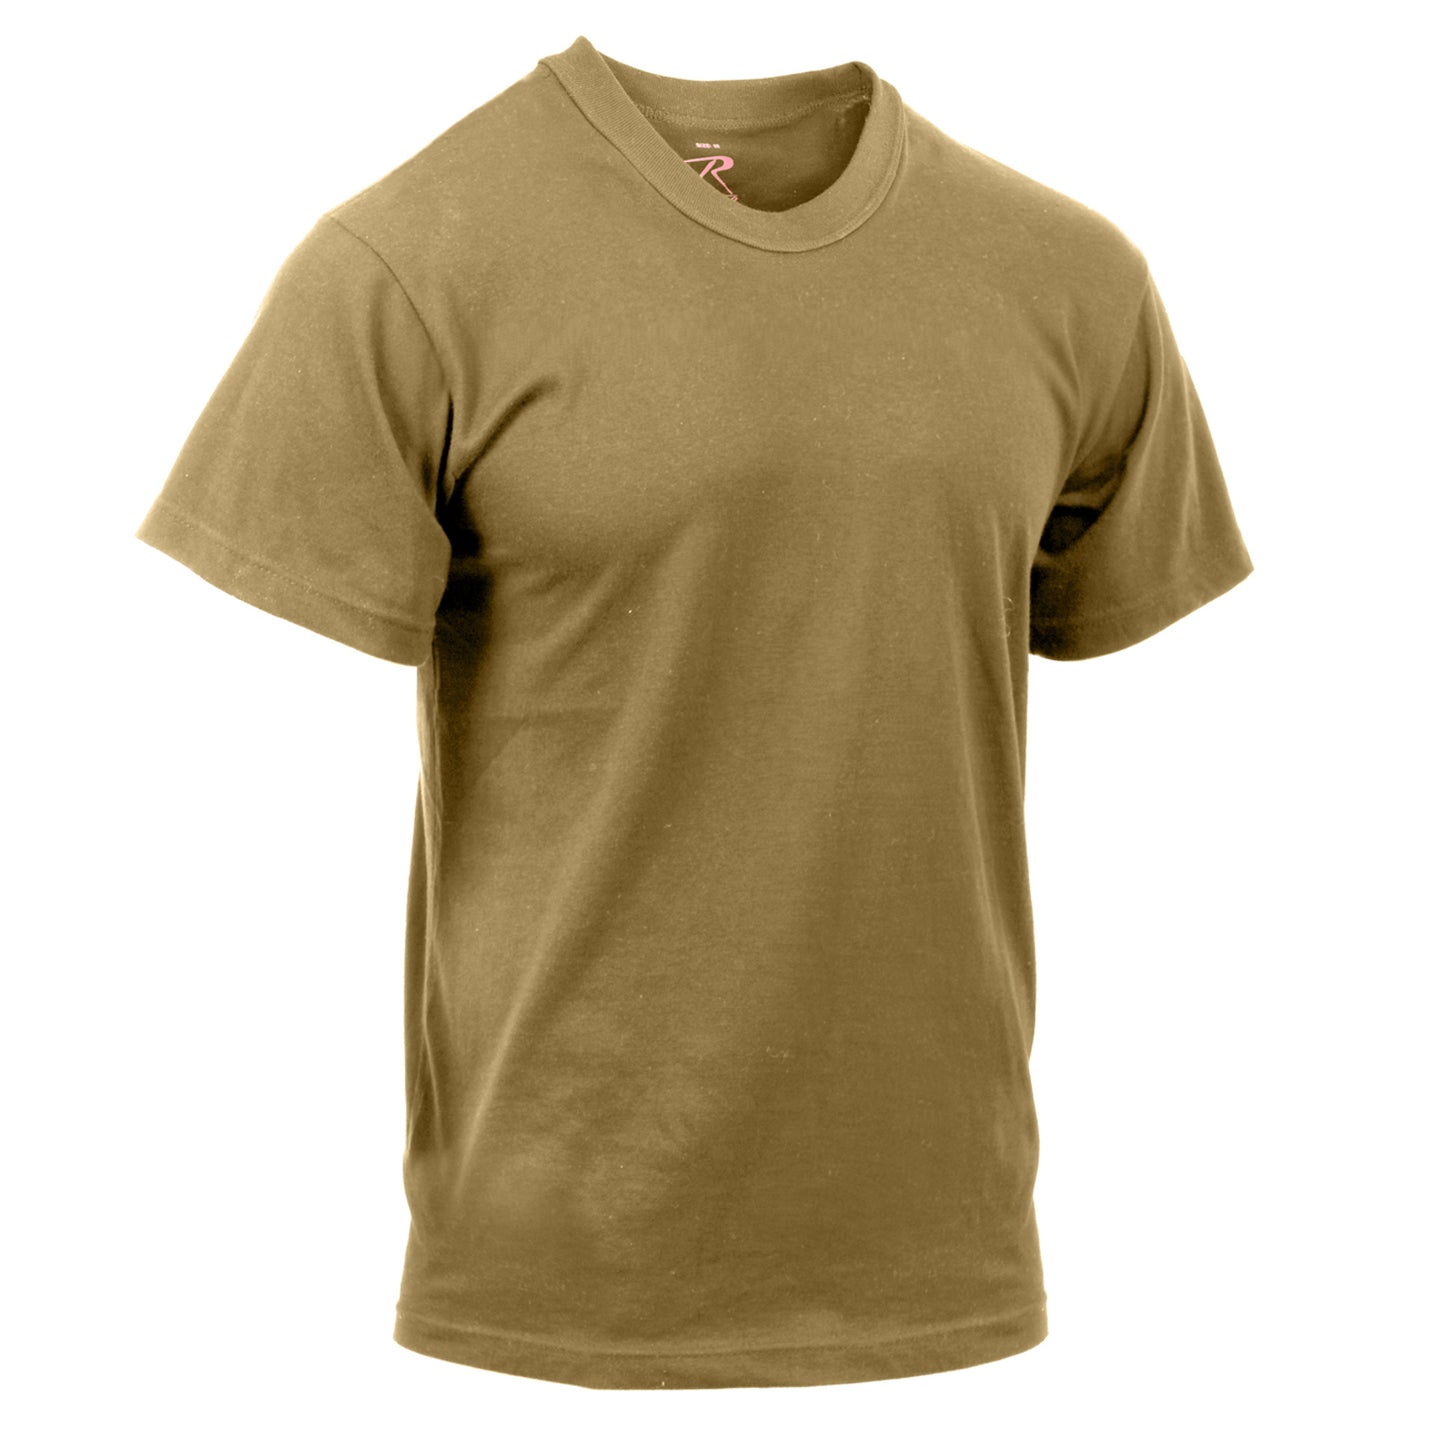 Milspec Moisture Wicking T-Shirts AR 670-1 Compliant Military Gear MilTac Tactical Military Outdoor Gear Australia